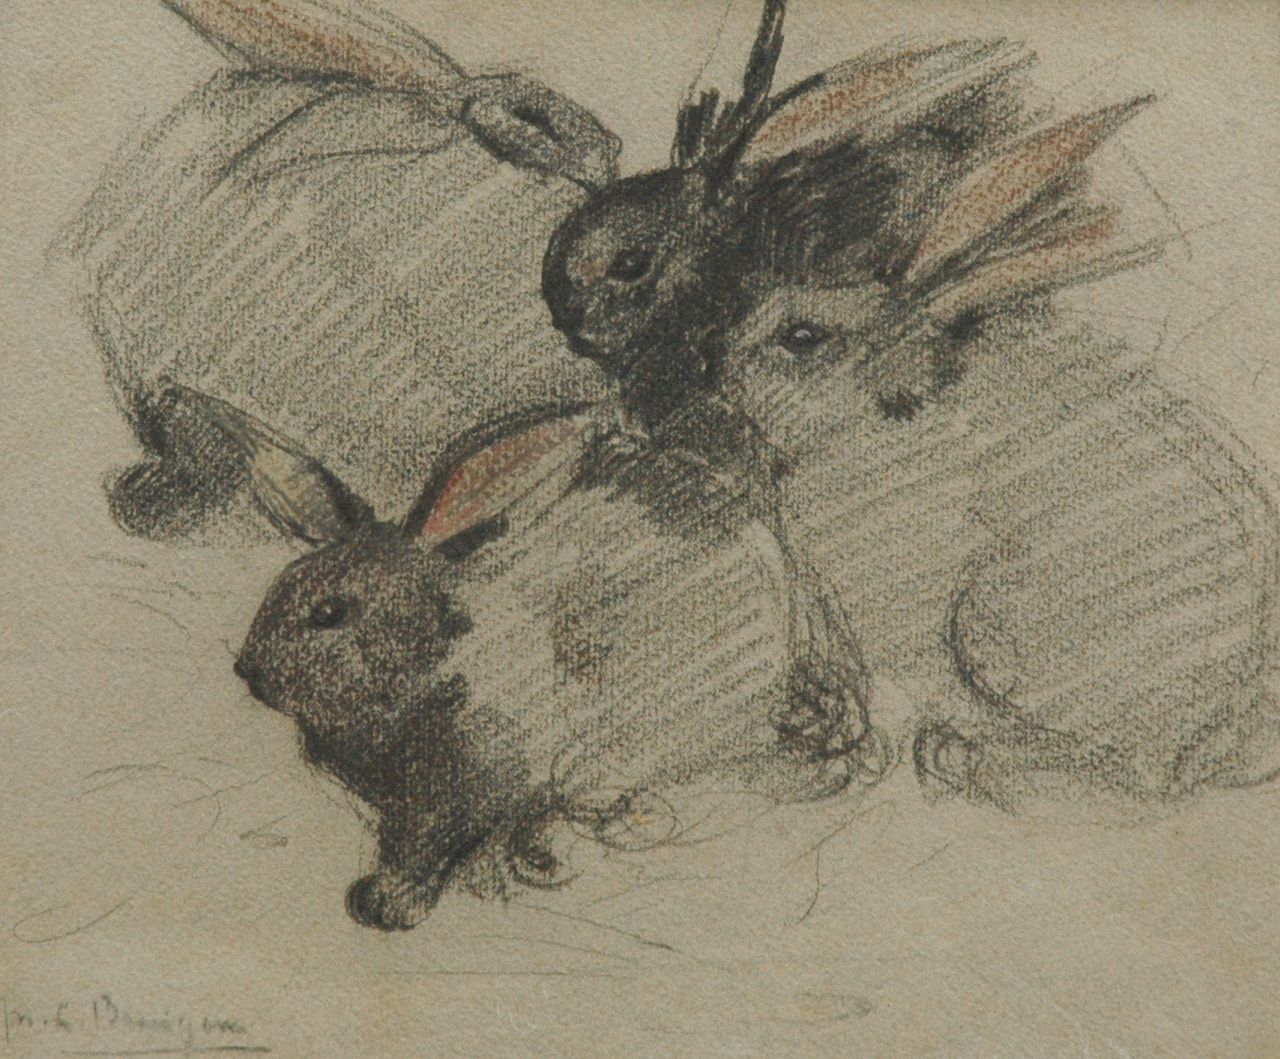 Bruigom M.C.  | Margaretha Cornelia 'Greta' Bruigom, Four rabbits, chalk on paper 24.1 x 29.0 cm, signed l.l.